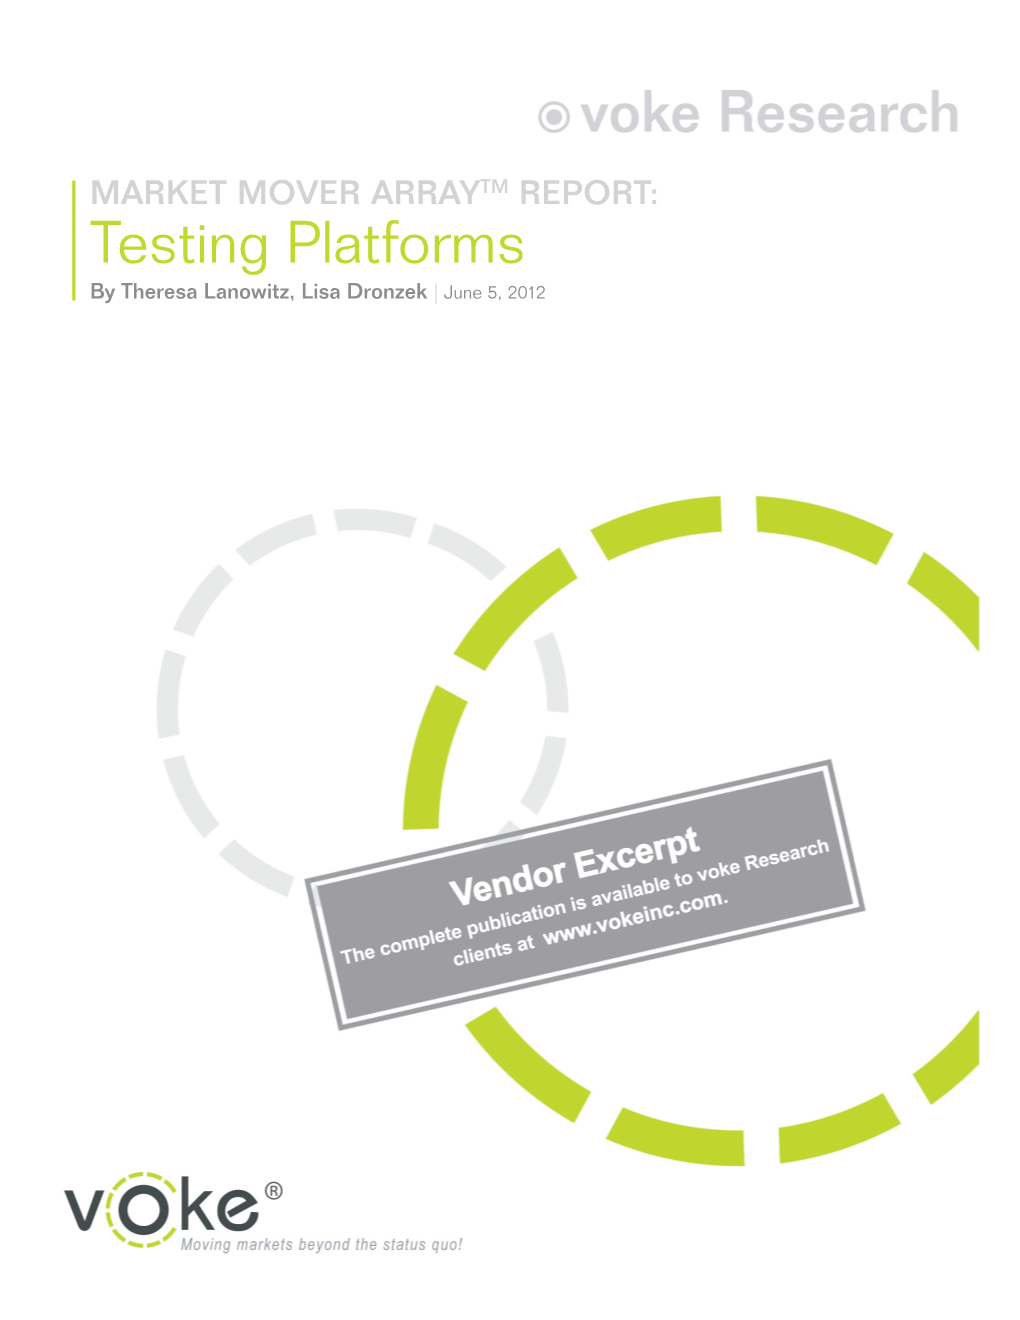 Testing Platforms by Theresa Lanowitz, Lisa Dronzek | June 5, 2012 €€Voke Research